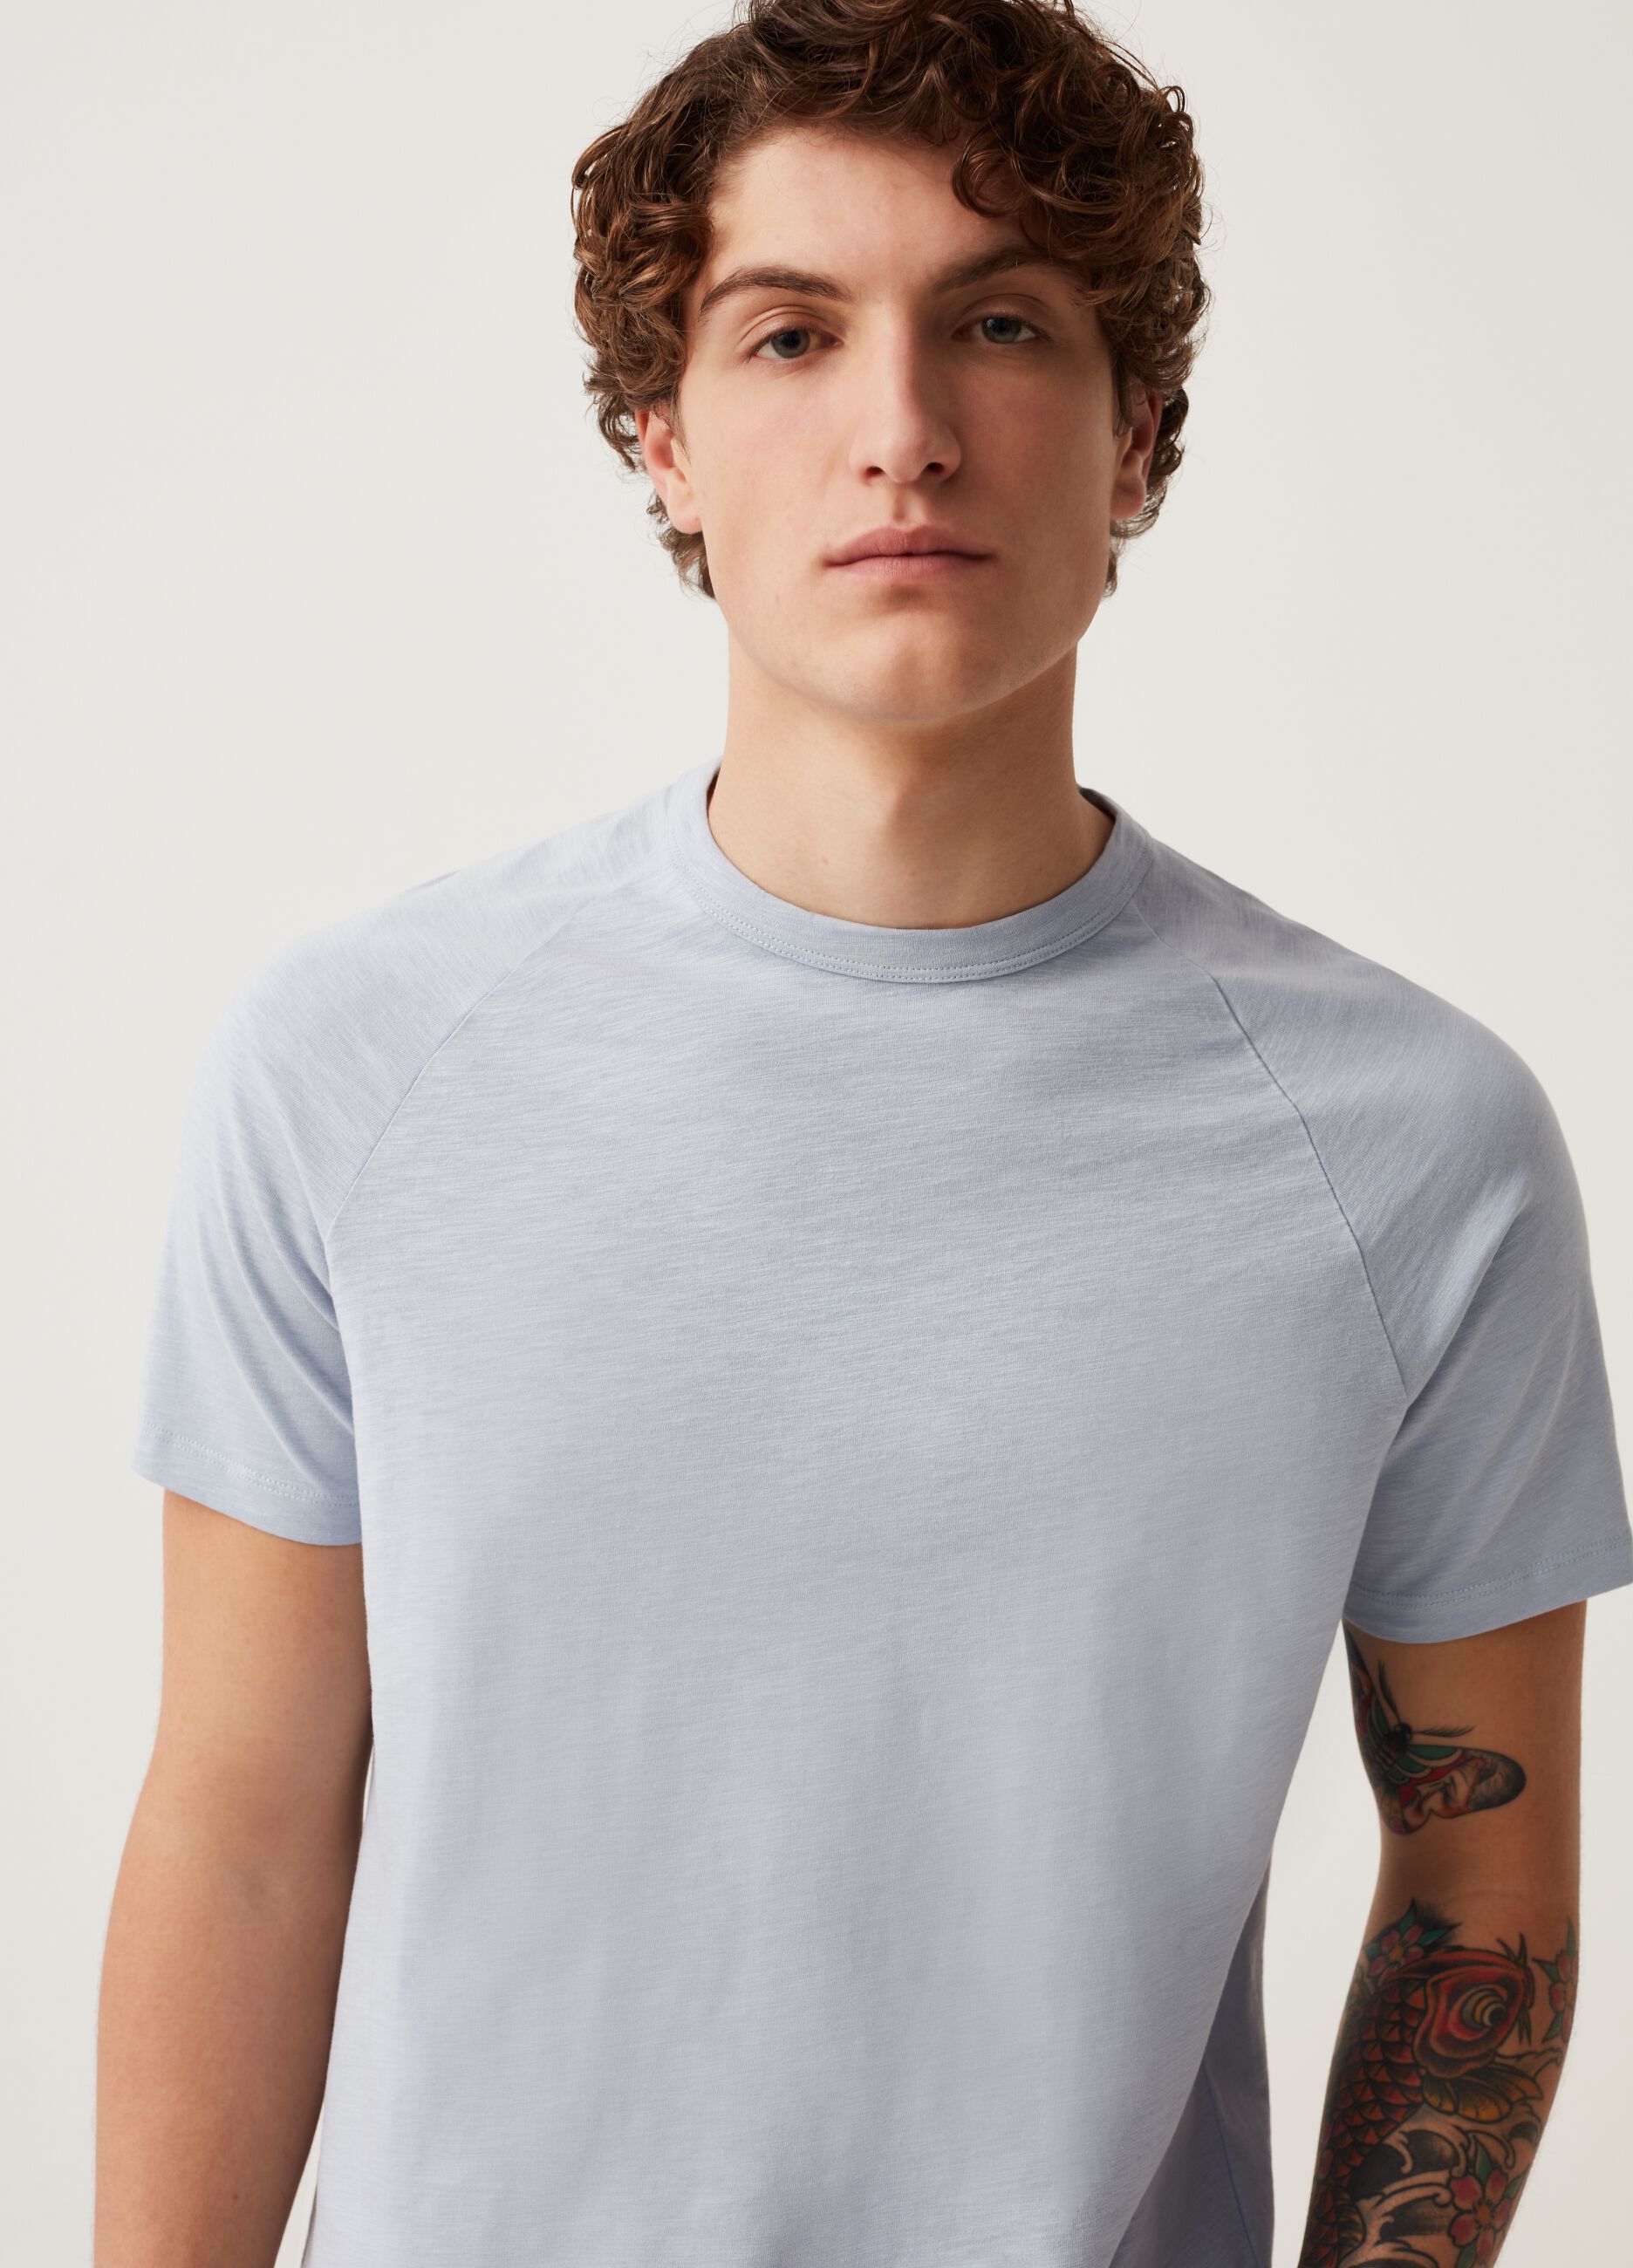 T-shirt in slub jersey con maniche raglan